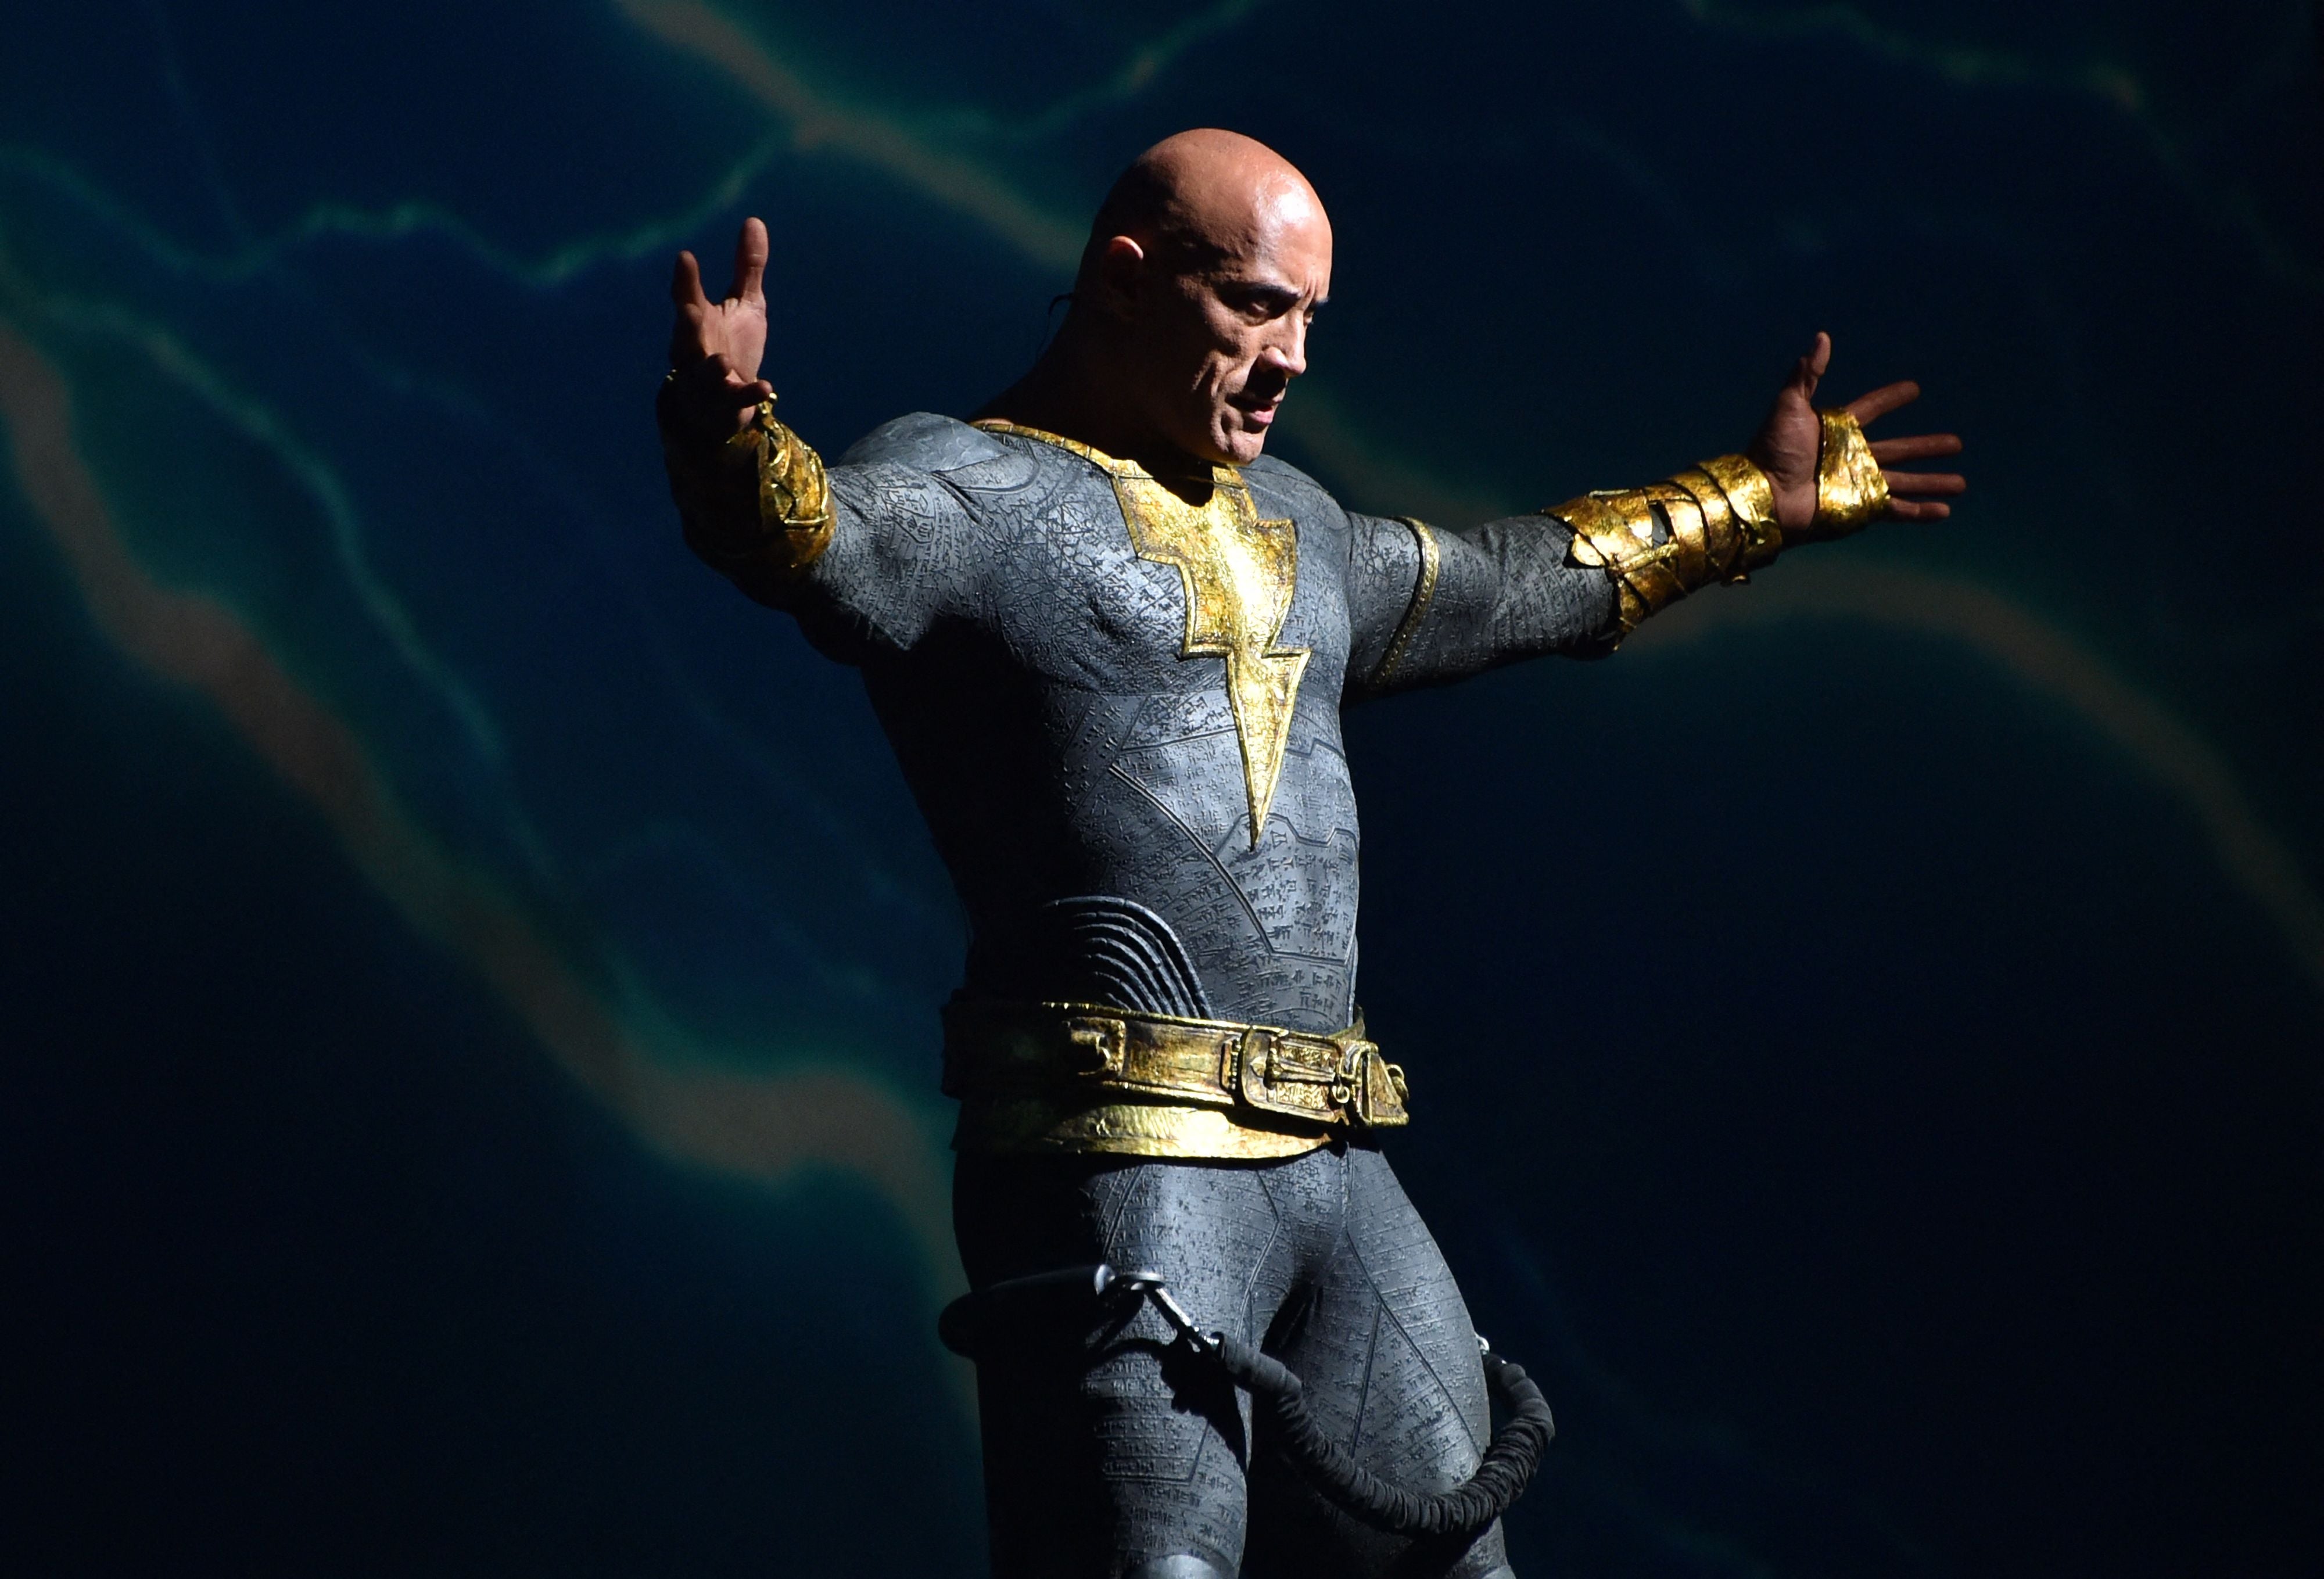 Shazam! Fury of the Gods Cast Reacts to New Trailer - San Diego